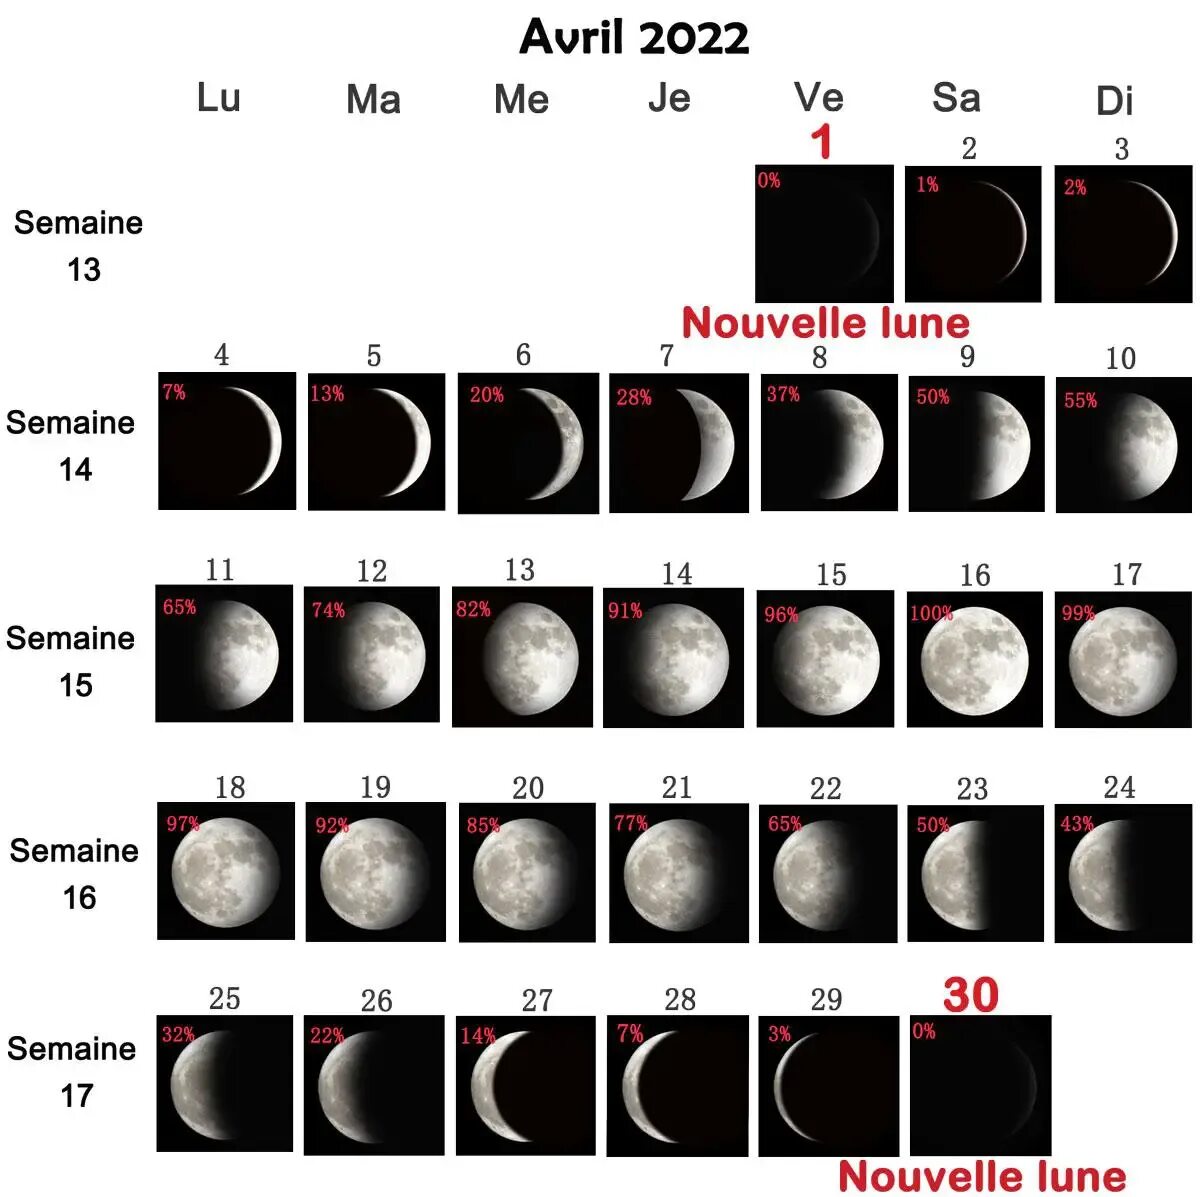 Календарь фаз луны на апрель 2024 года. Фазы Луны. Стадии Луны. Фазы Луны 2022. Календарь фаз Луны на 2022 год по месяцам.